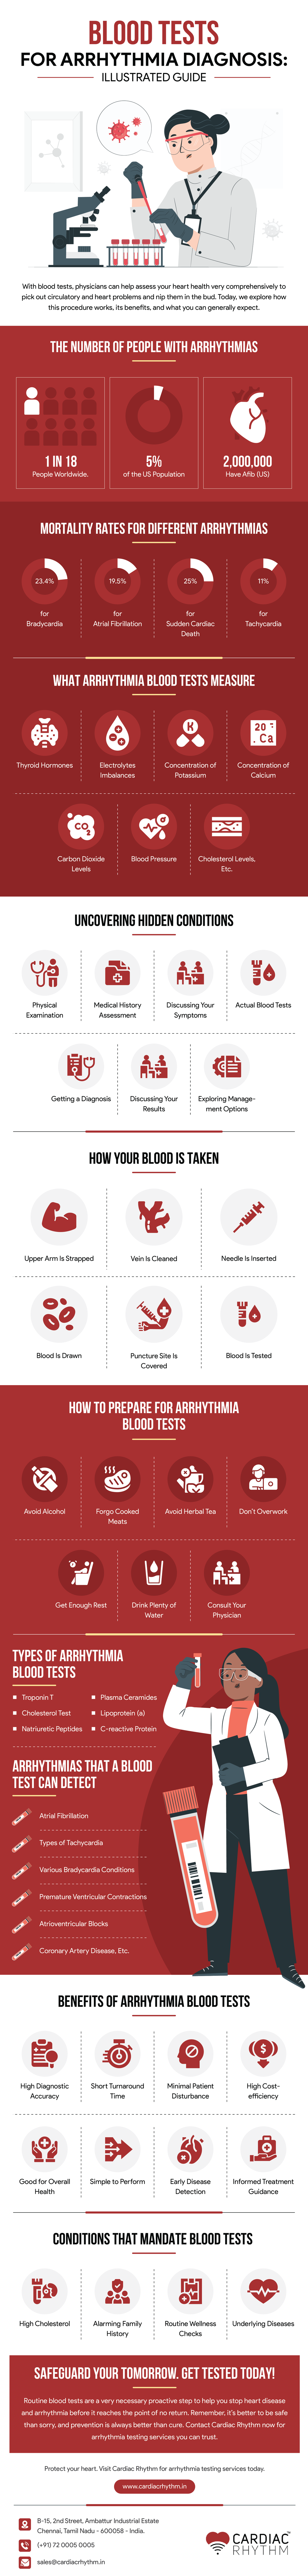 Blood Tests for Arrhythmia Diagnosis 